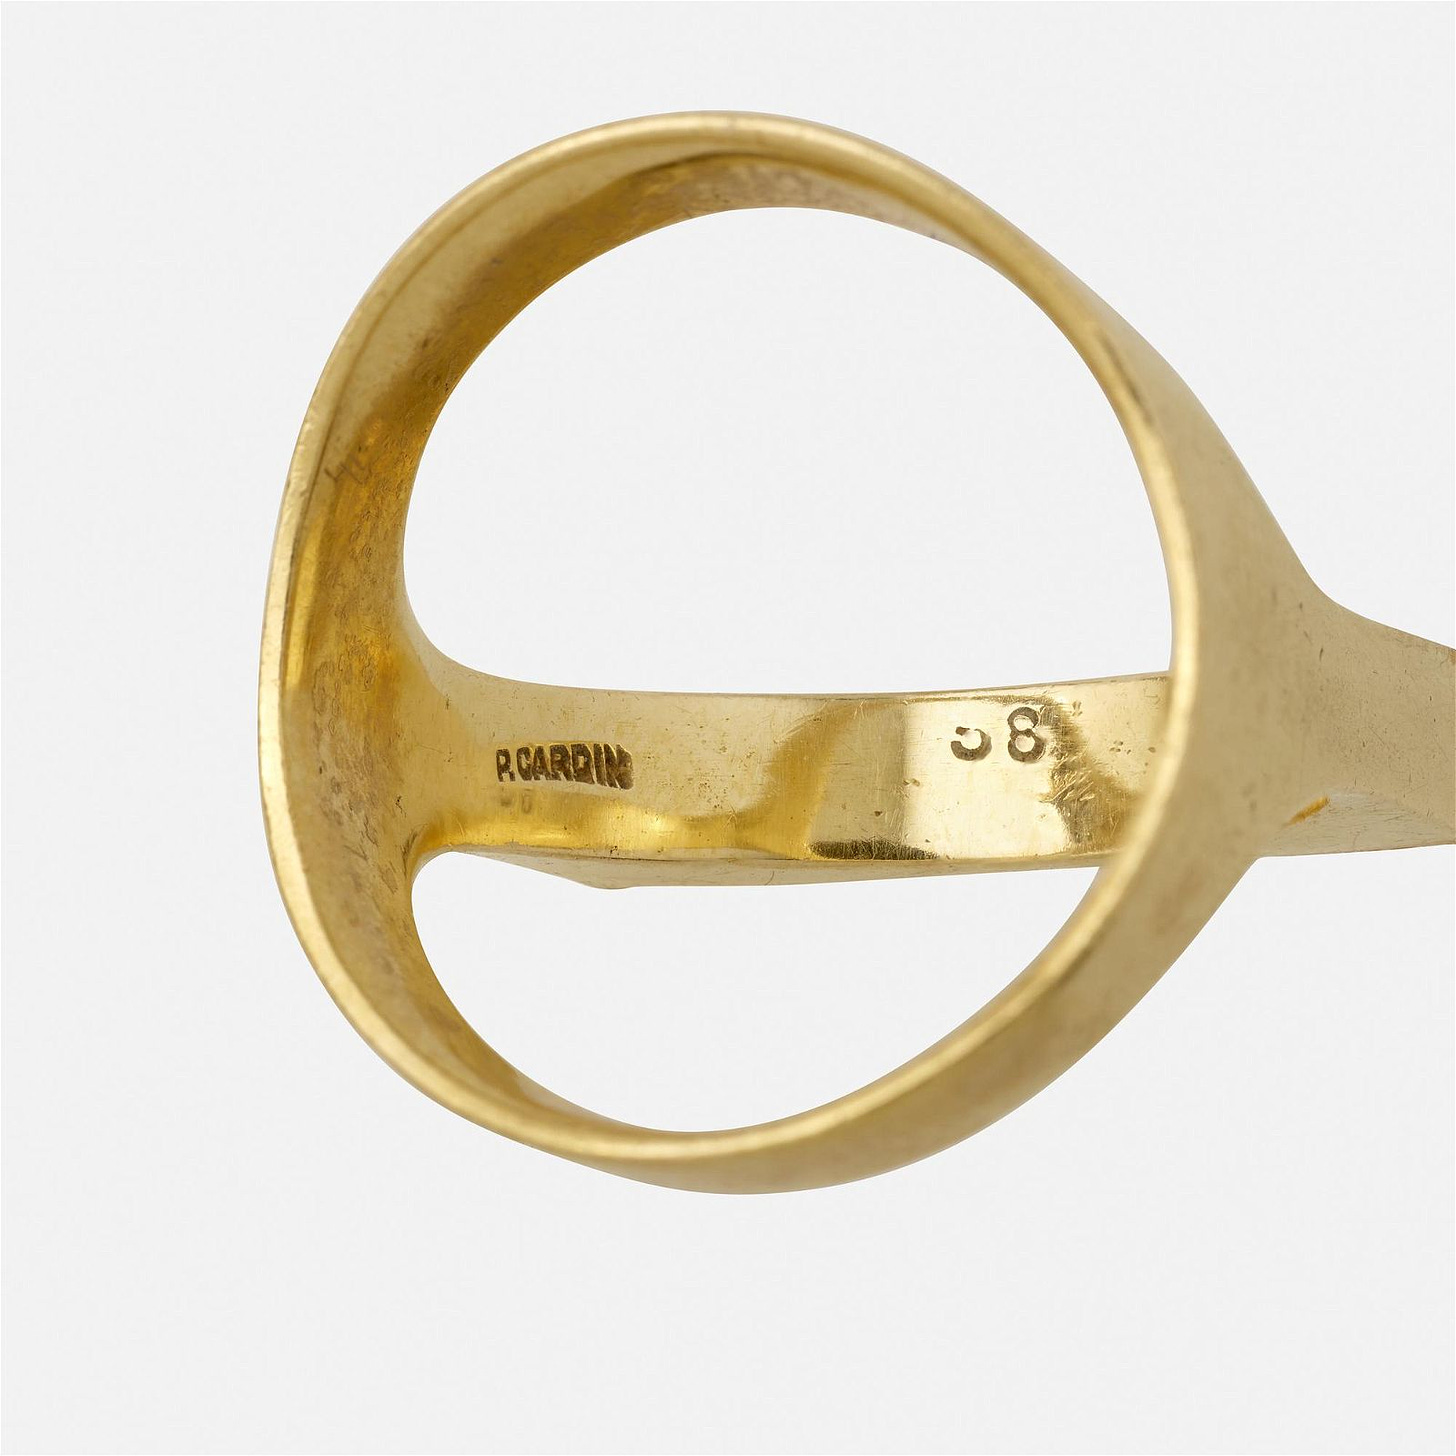 Pierre Cardin, Gold ring